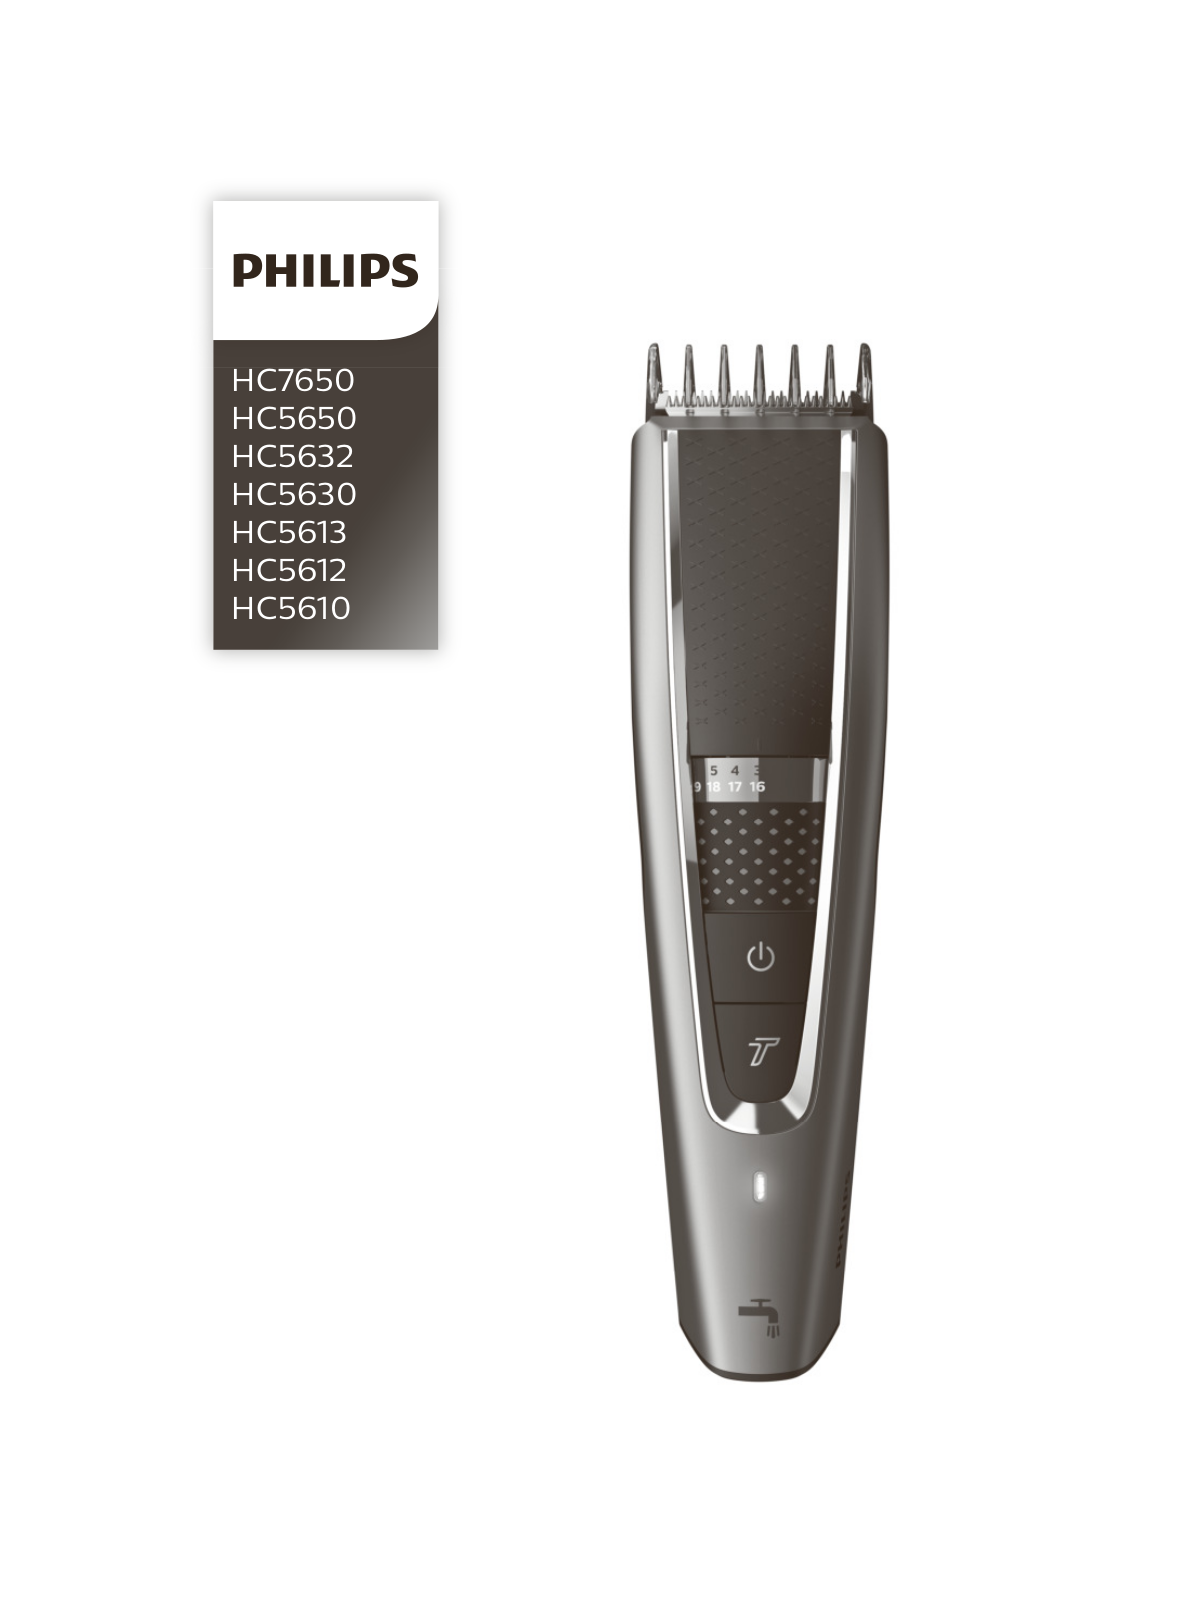 Philips HC5610 User Manual